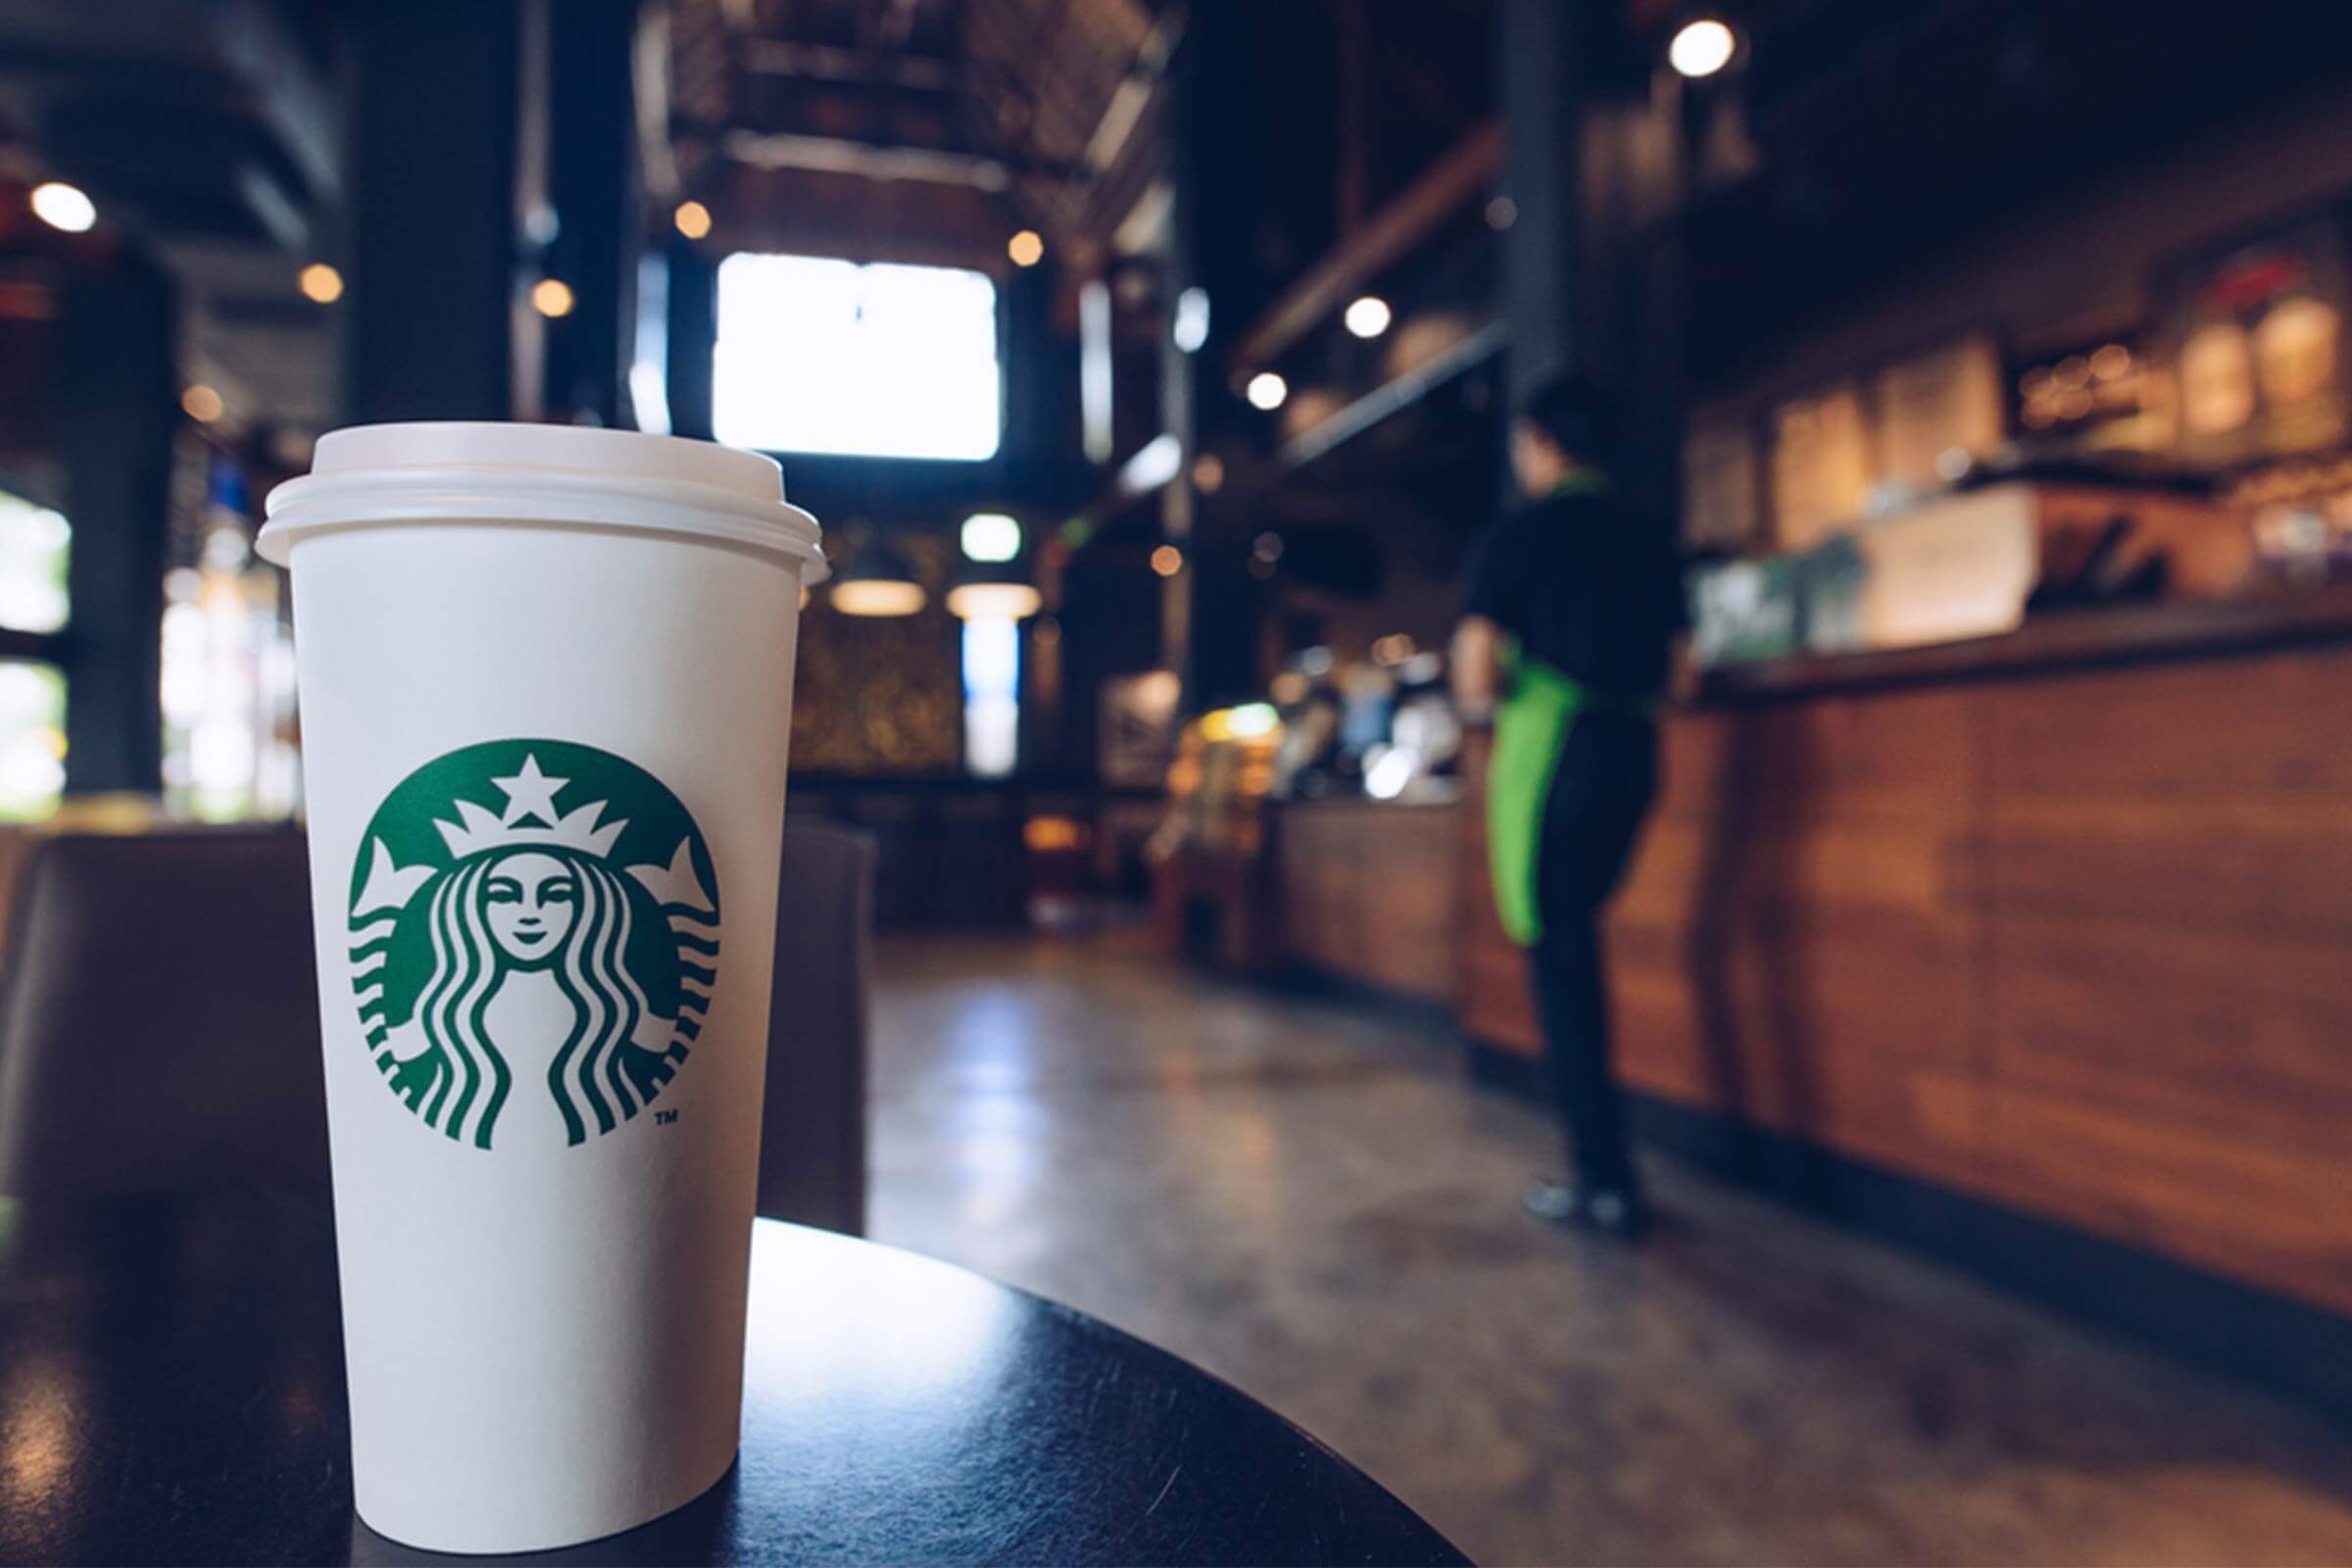 Venti Latte at Starbucks